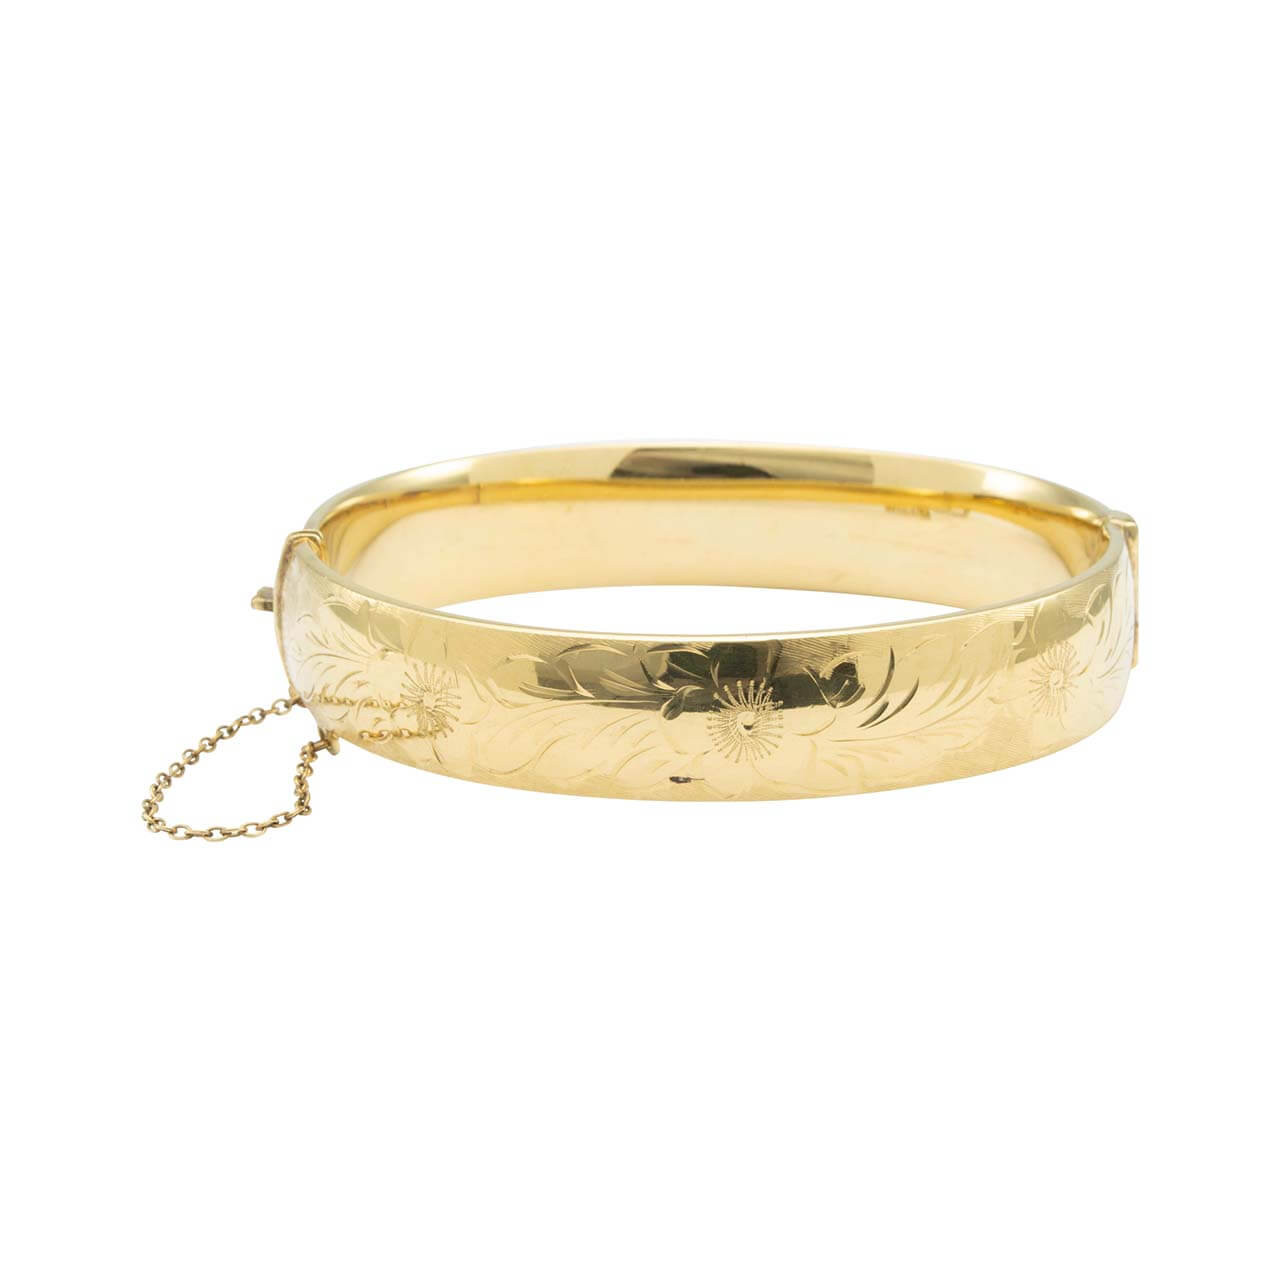 ANTIQUE GEORGIAN ROLLED GOLD BRACELET 18.5 CM LONG ORNATE RARE 1820S  COLLECTIBLE | eBay